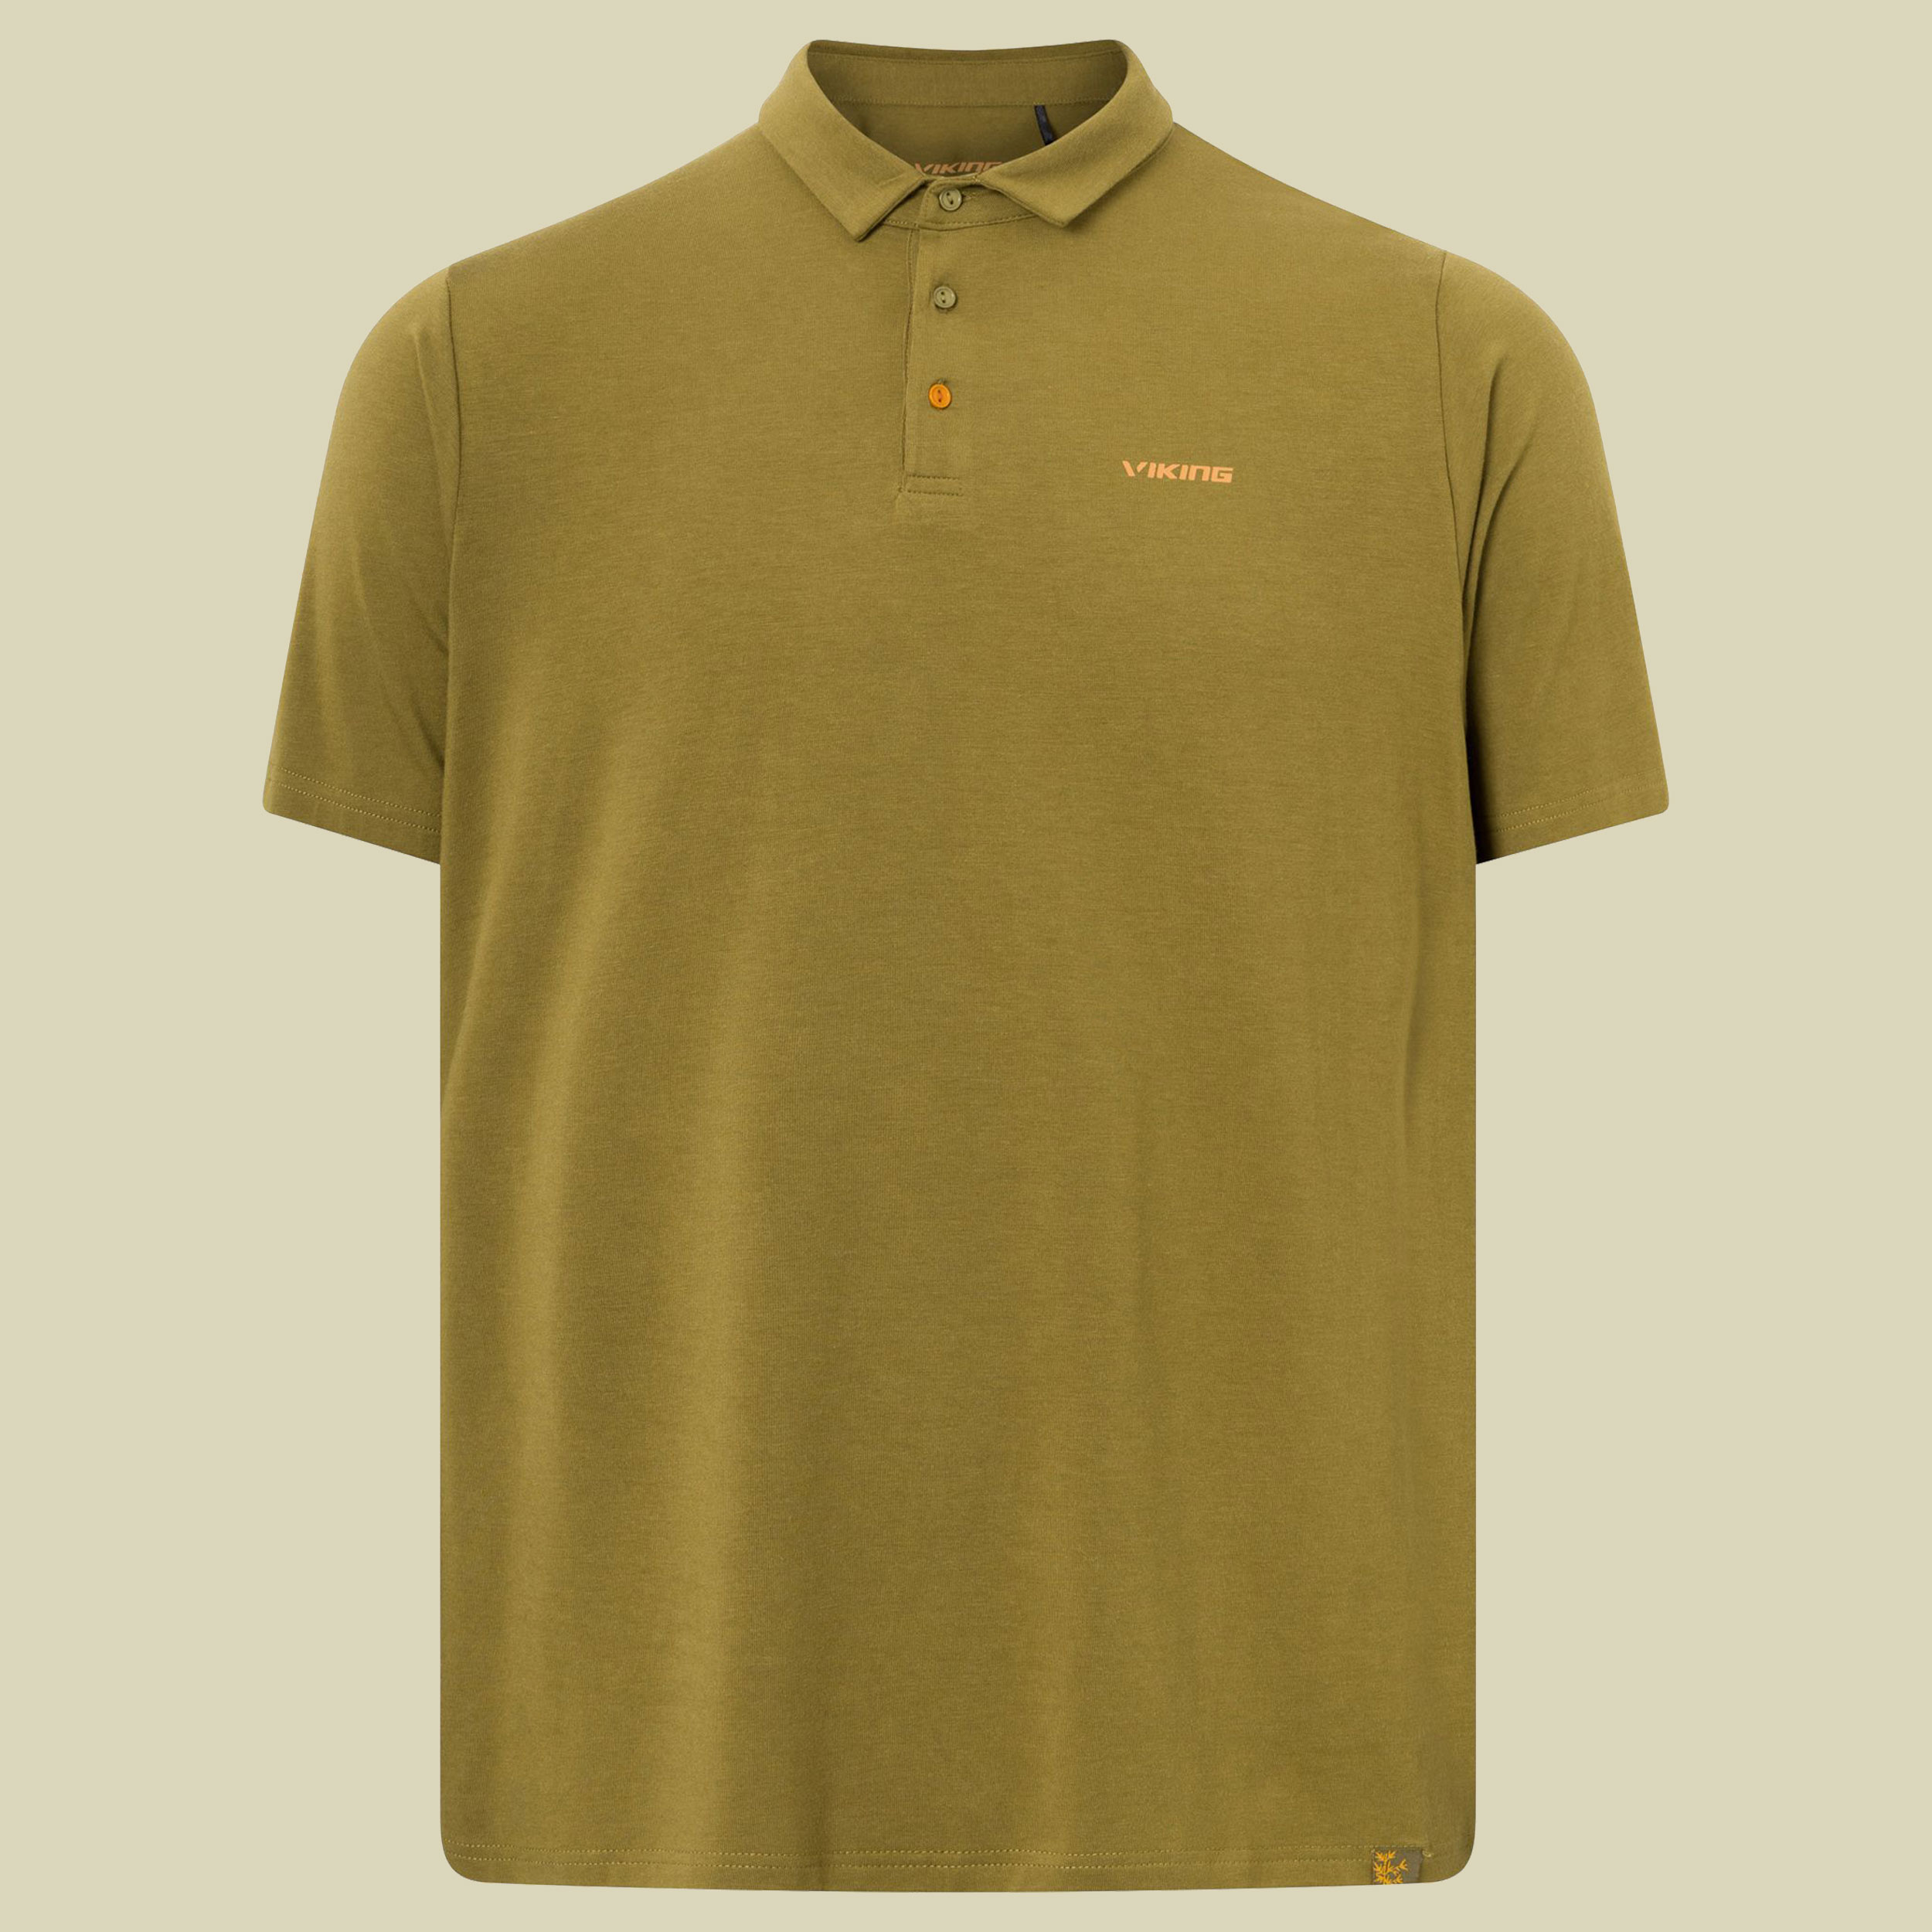 Winslow Polo Shirt Men XL braun - Farbe olive